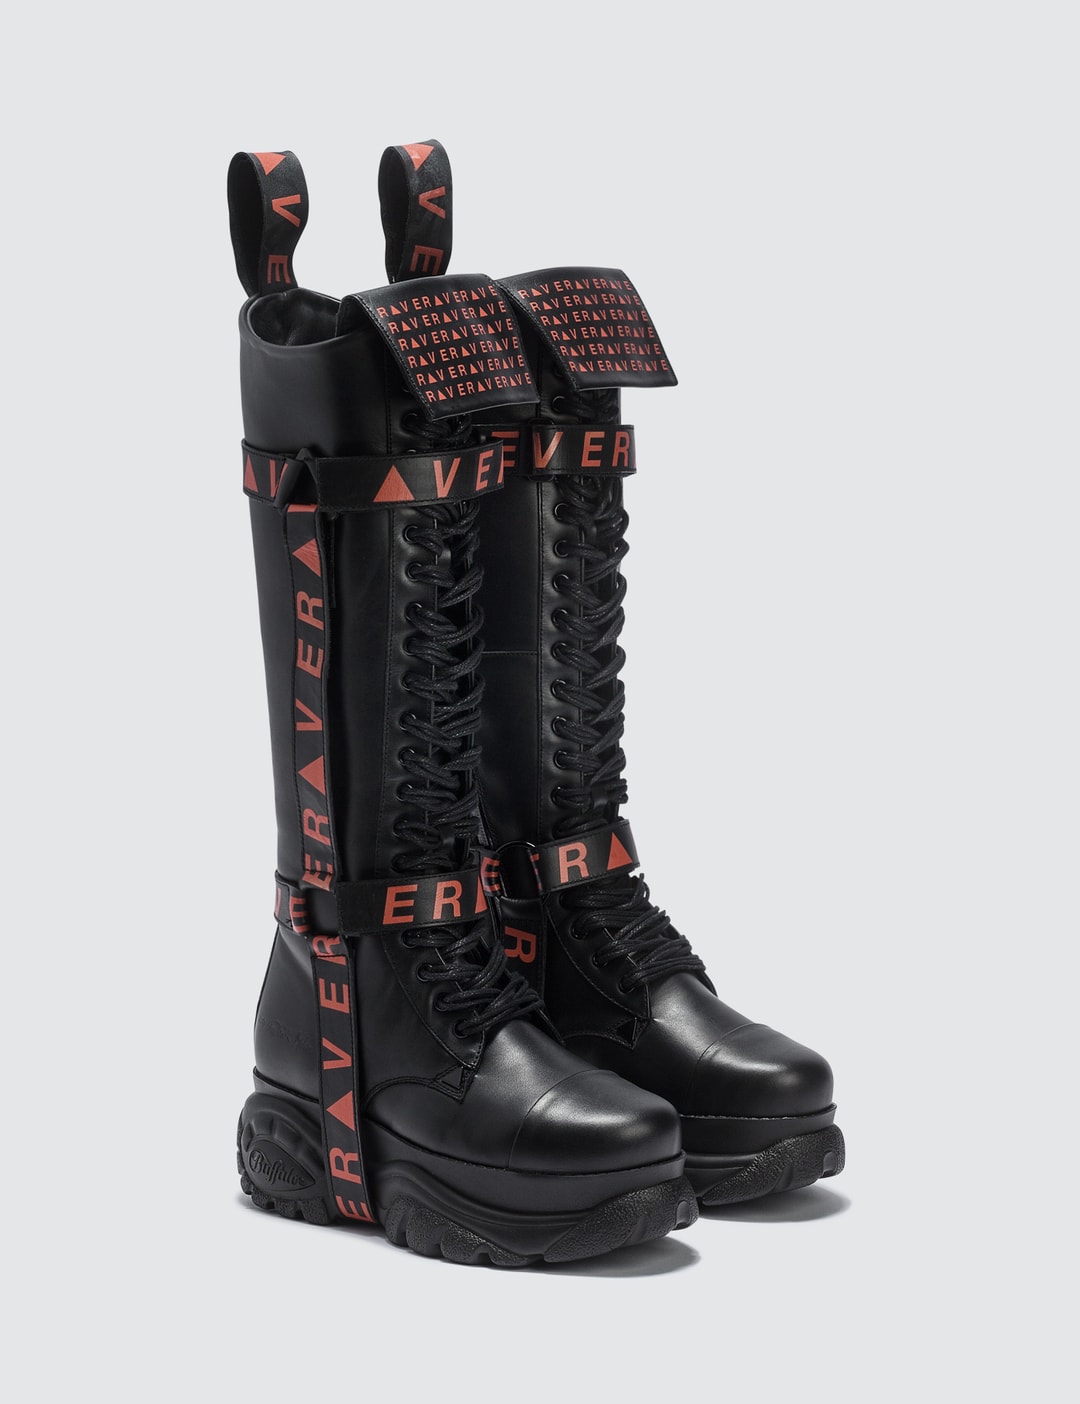 Buffalo London - Buffalo X Rave High Boots | HBX - Globally Curated Fashion and by Hypebeast